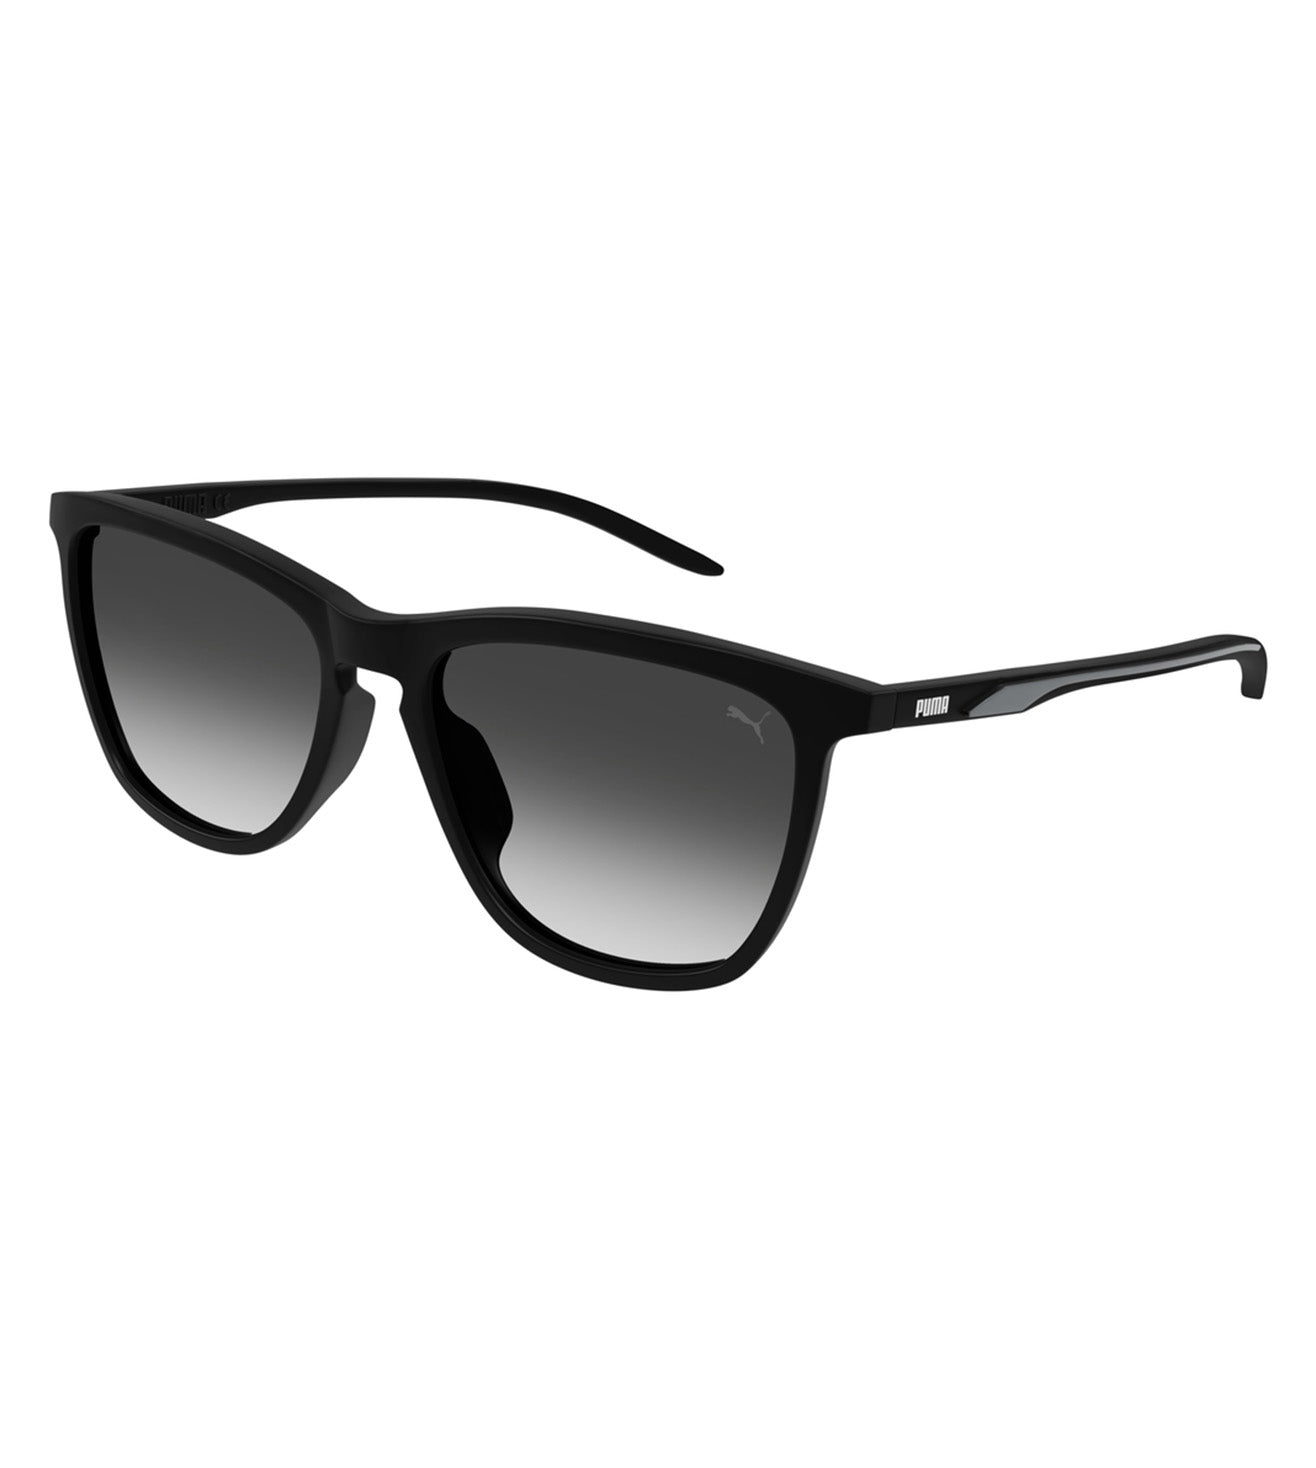 Puma Men's Black-Smoke Square Sunglasses